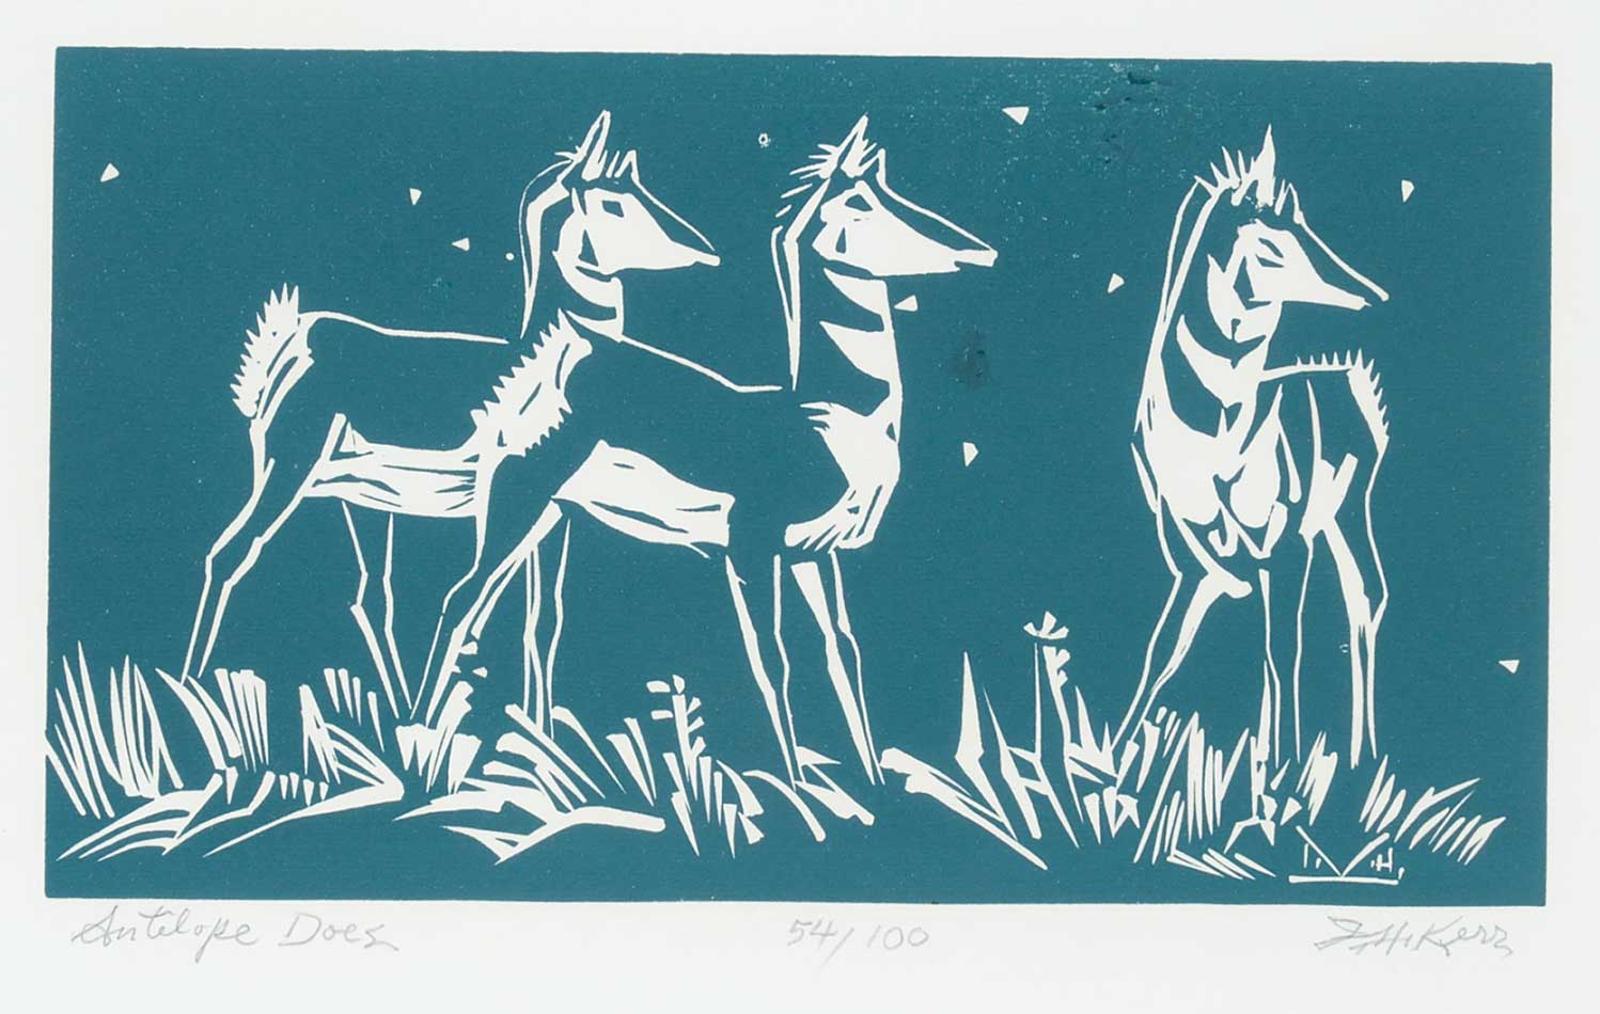 Illingworth Holey (Buck) Kerr (1905-1989) - Antelope Does  #54/100